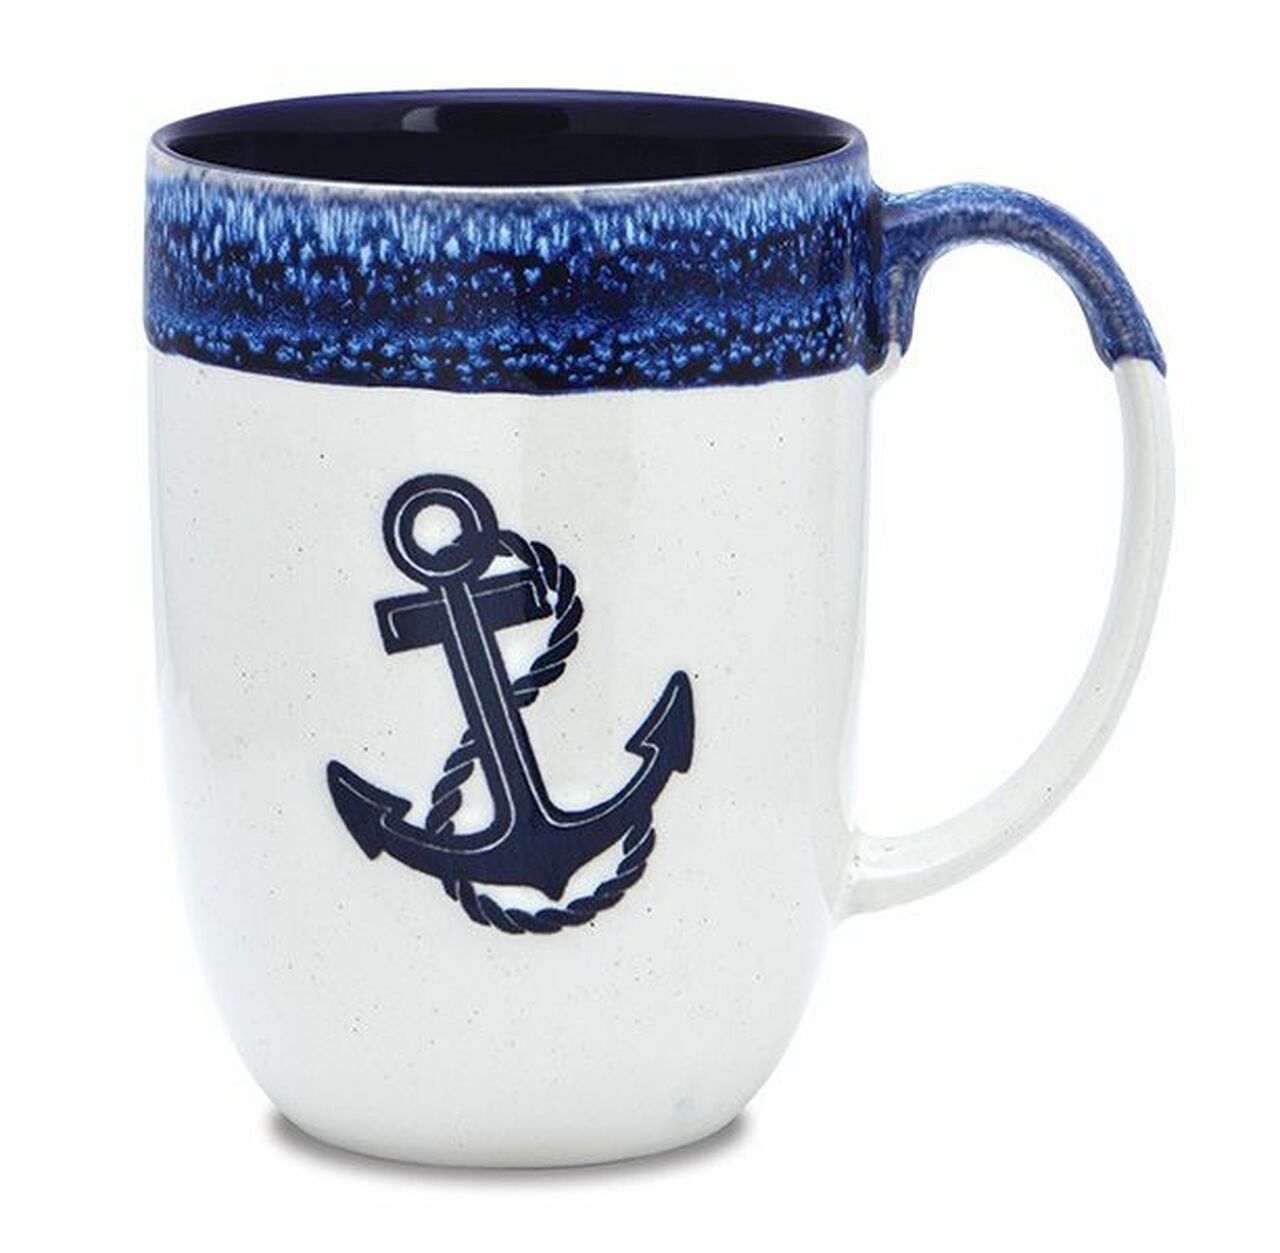 Coffee mug with blue anchor design and glazed blue rim